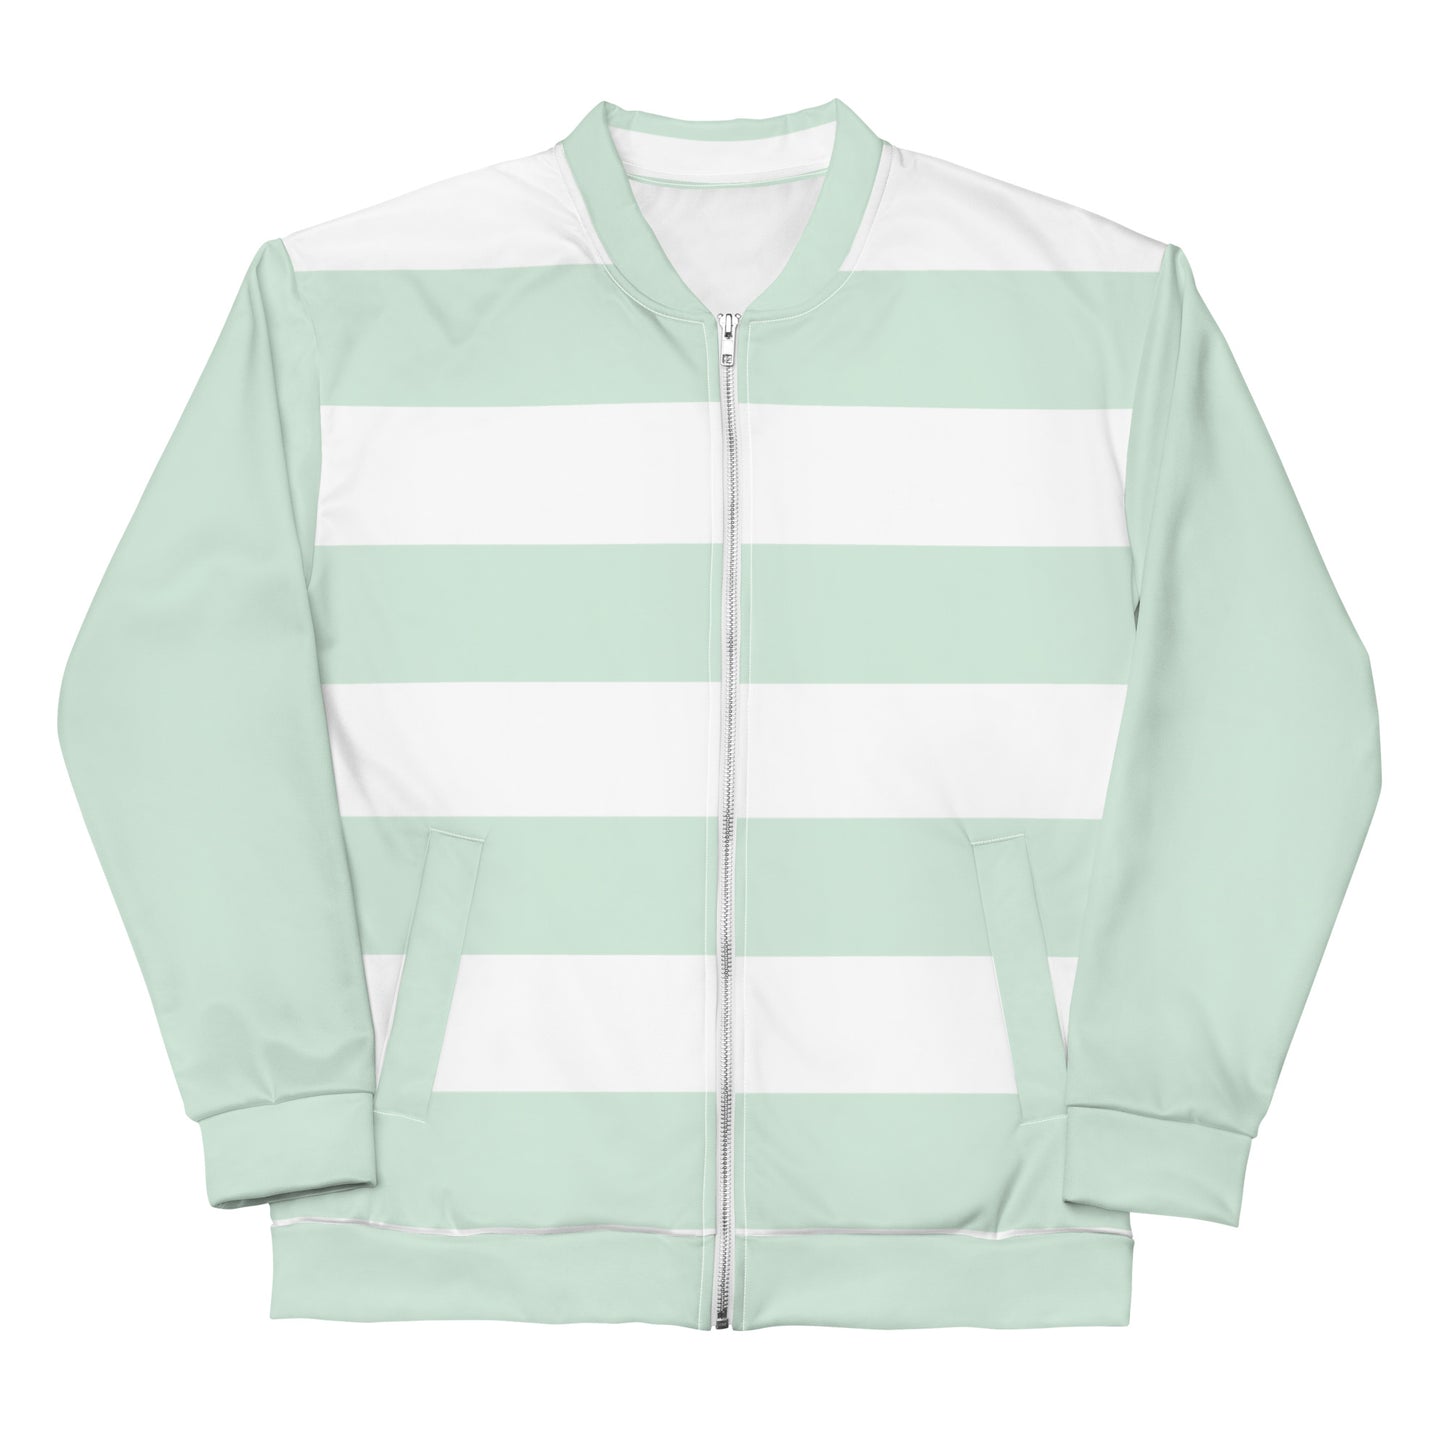 Sailor Mint - Sustainably Made Jacket